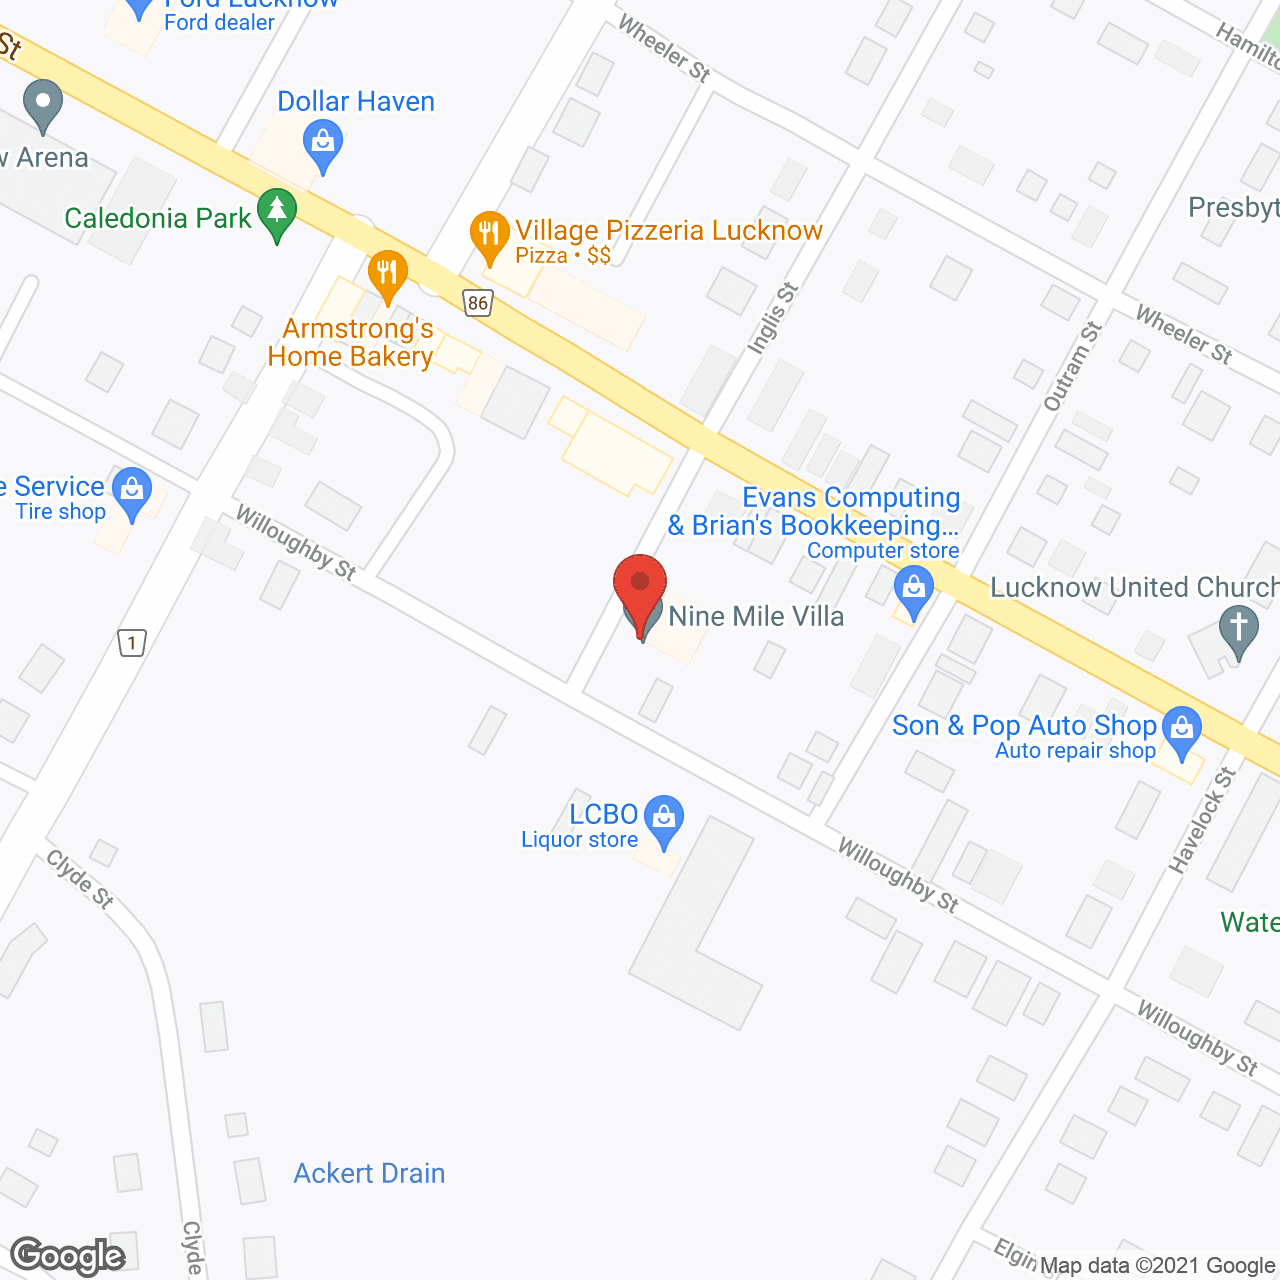 Nine Mile Villa in google map